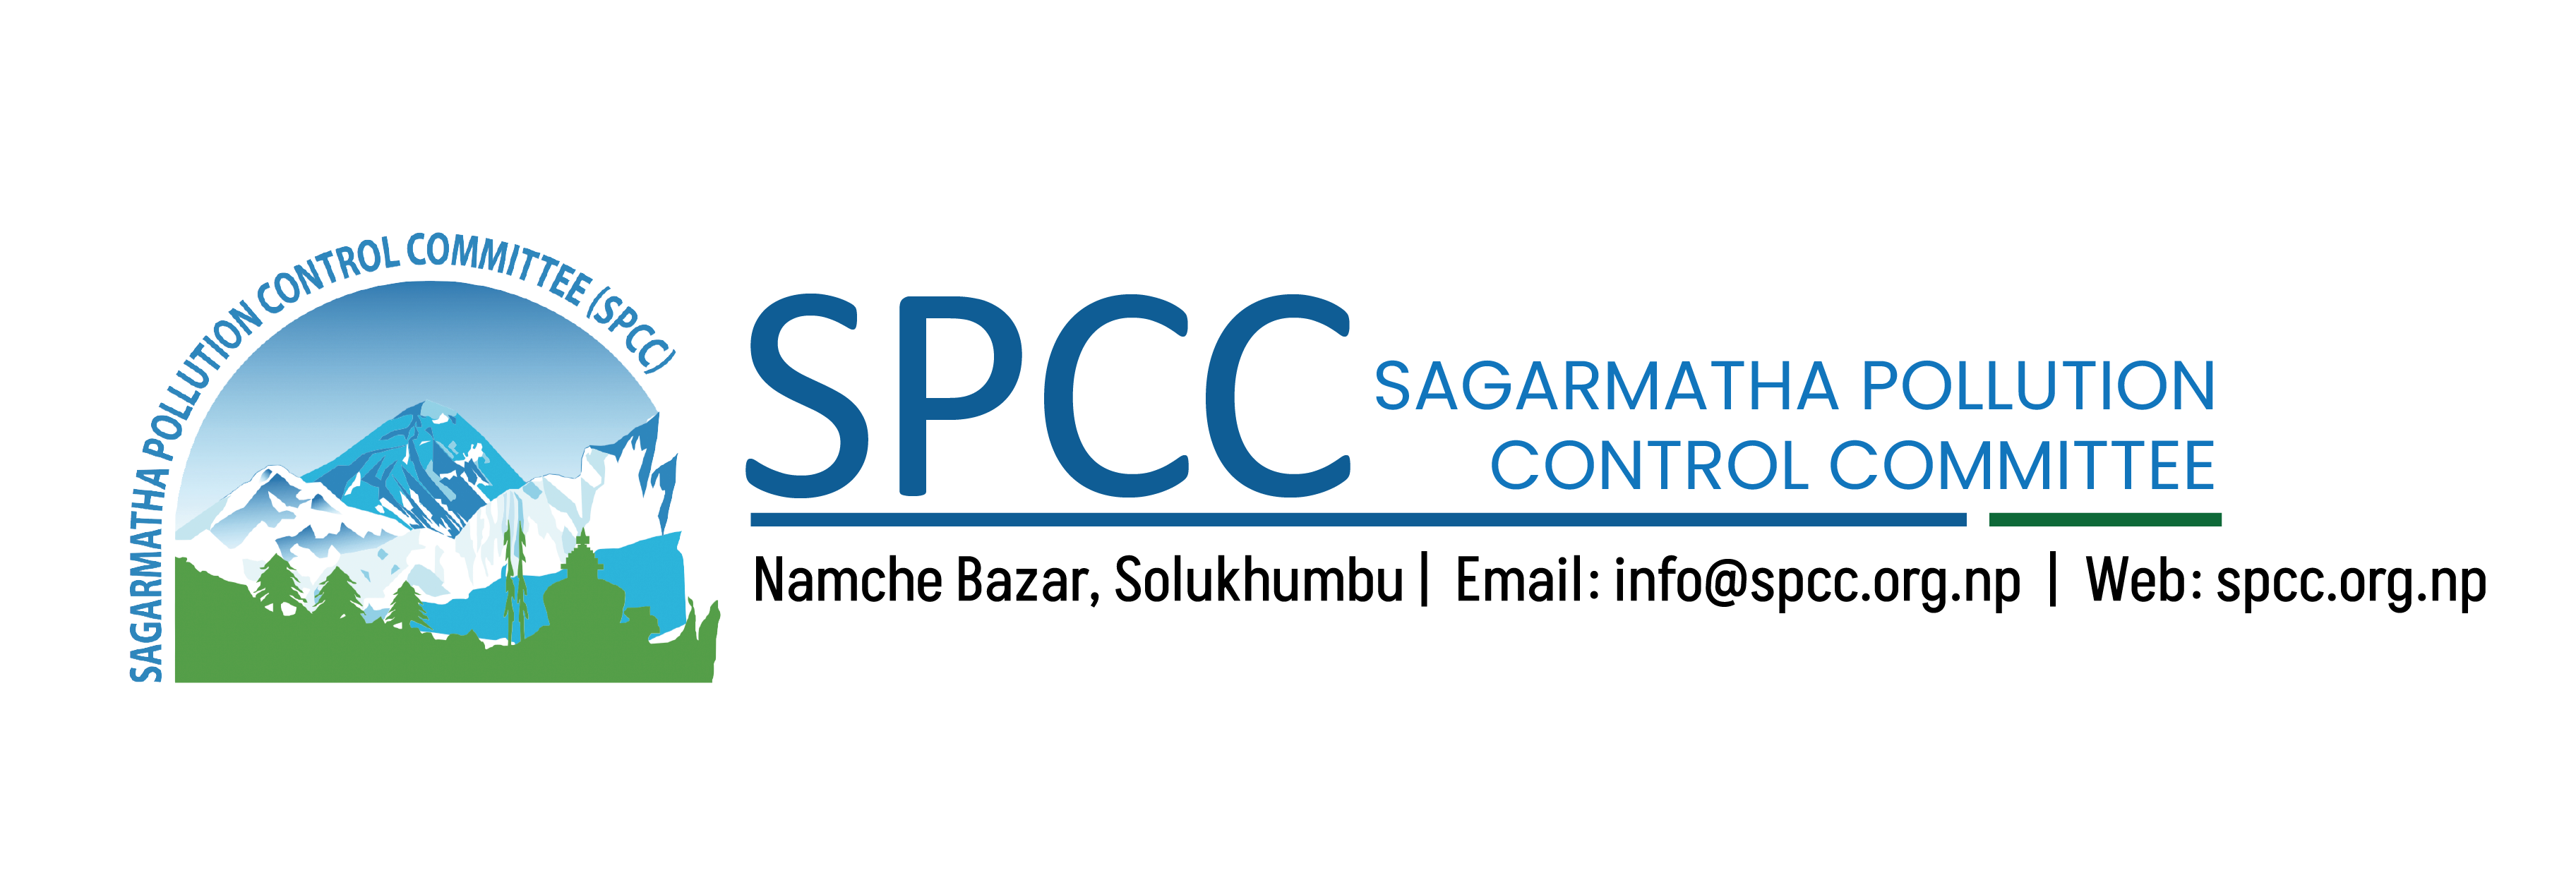 SPCC Management System